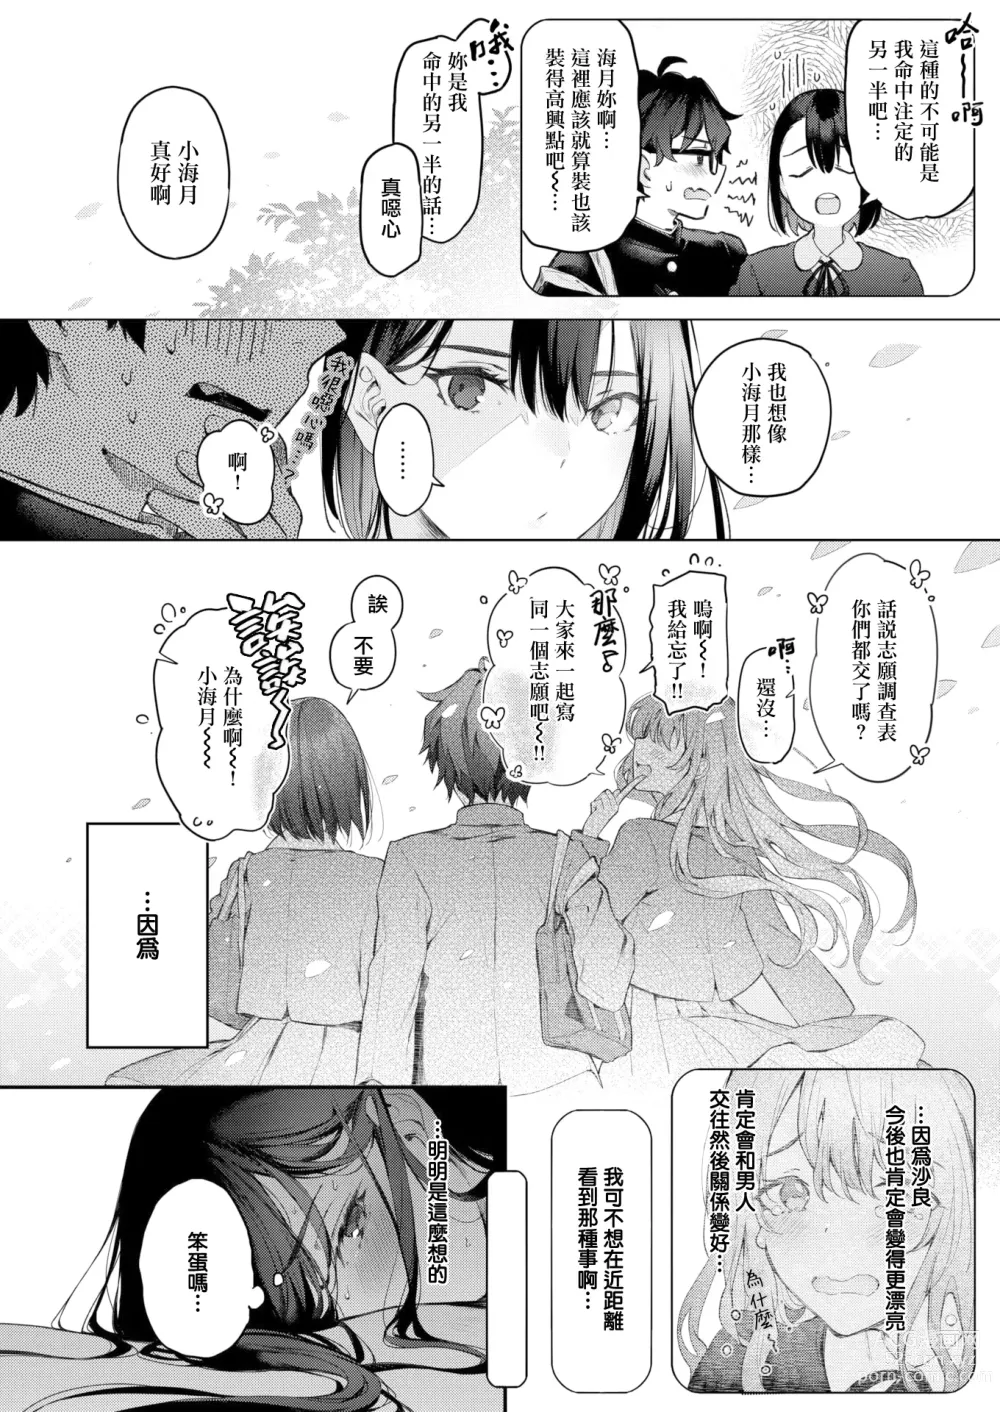 Page 10 of manga Watashi no Kirai na Hito (uncensored)